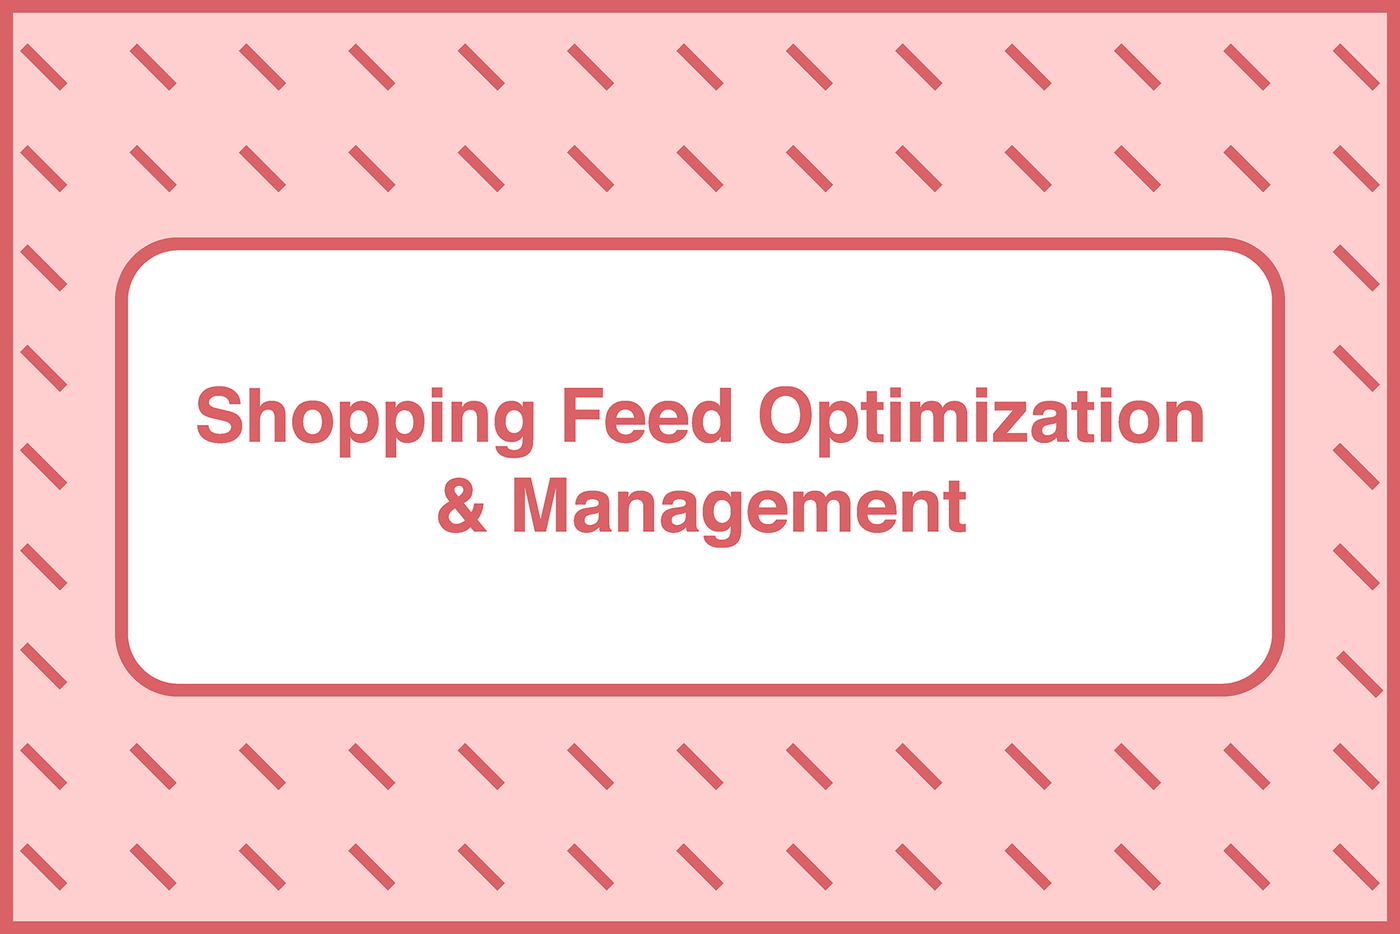 Shopping Feed Optimization and Management